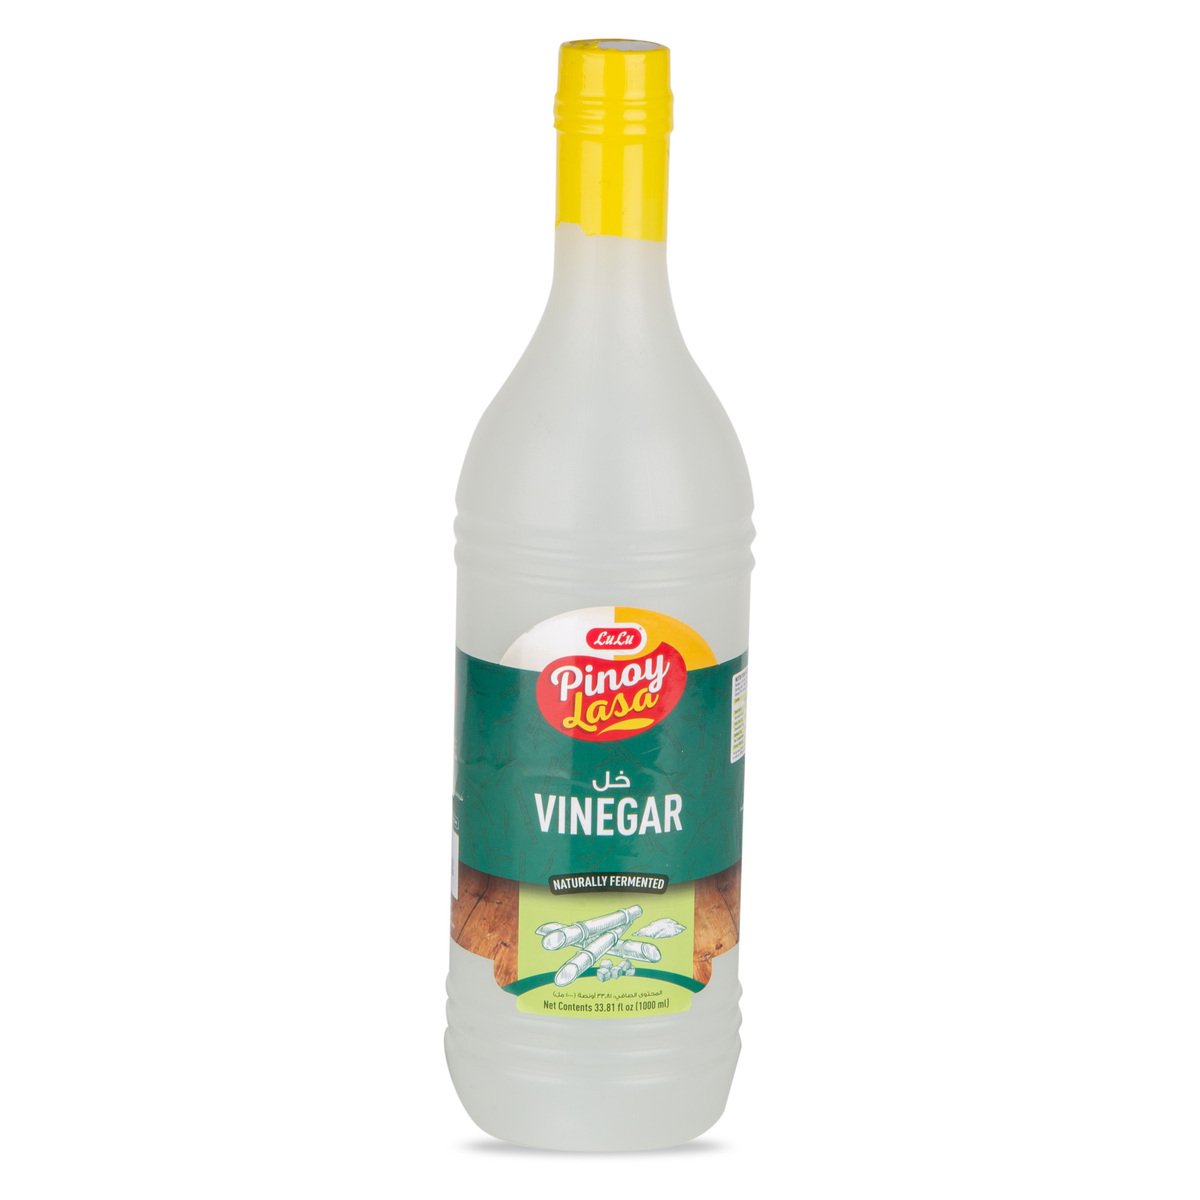 LuLu Pinoy Lasa Vinegar 1Litre